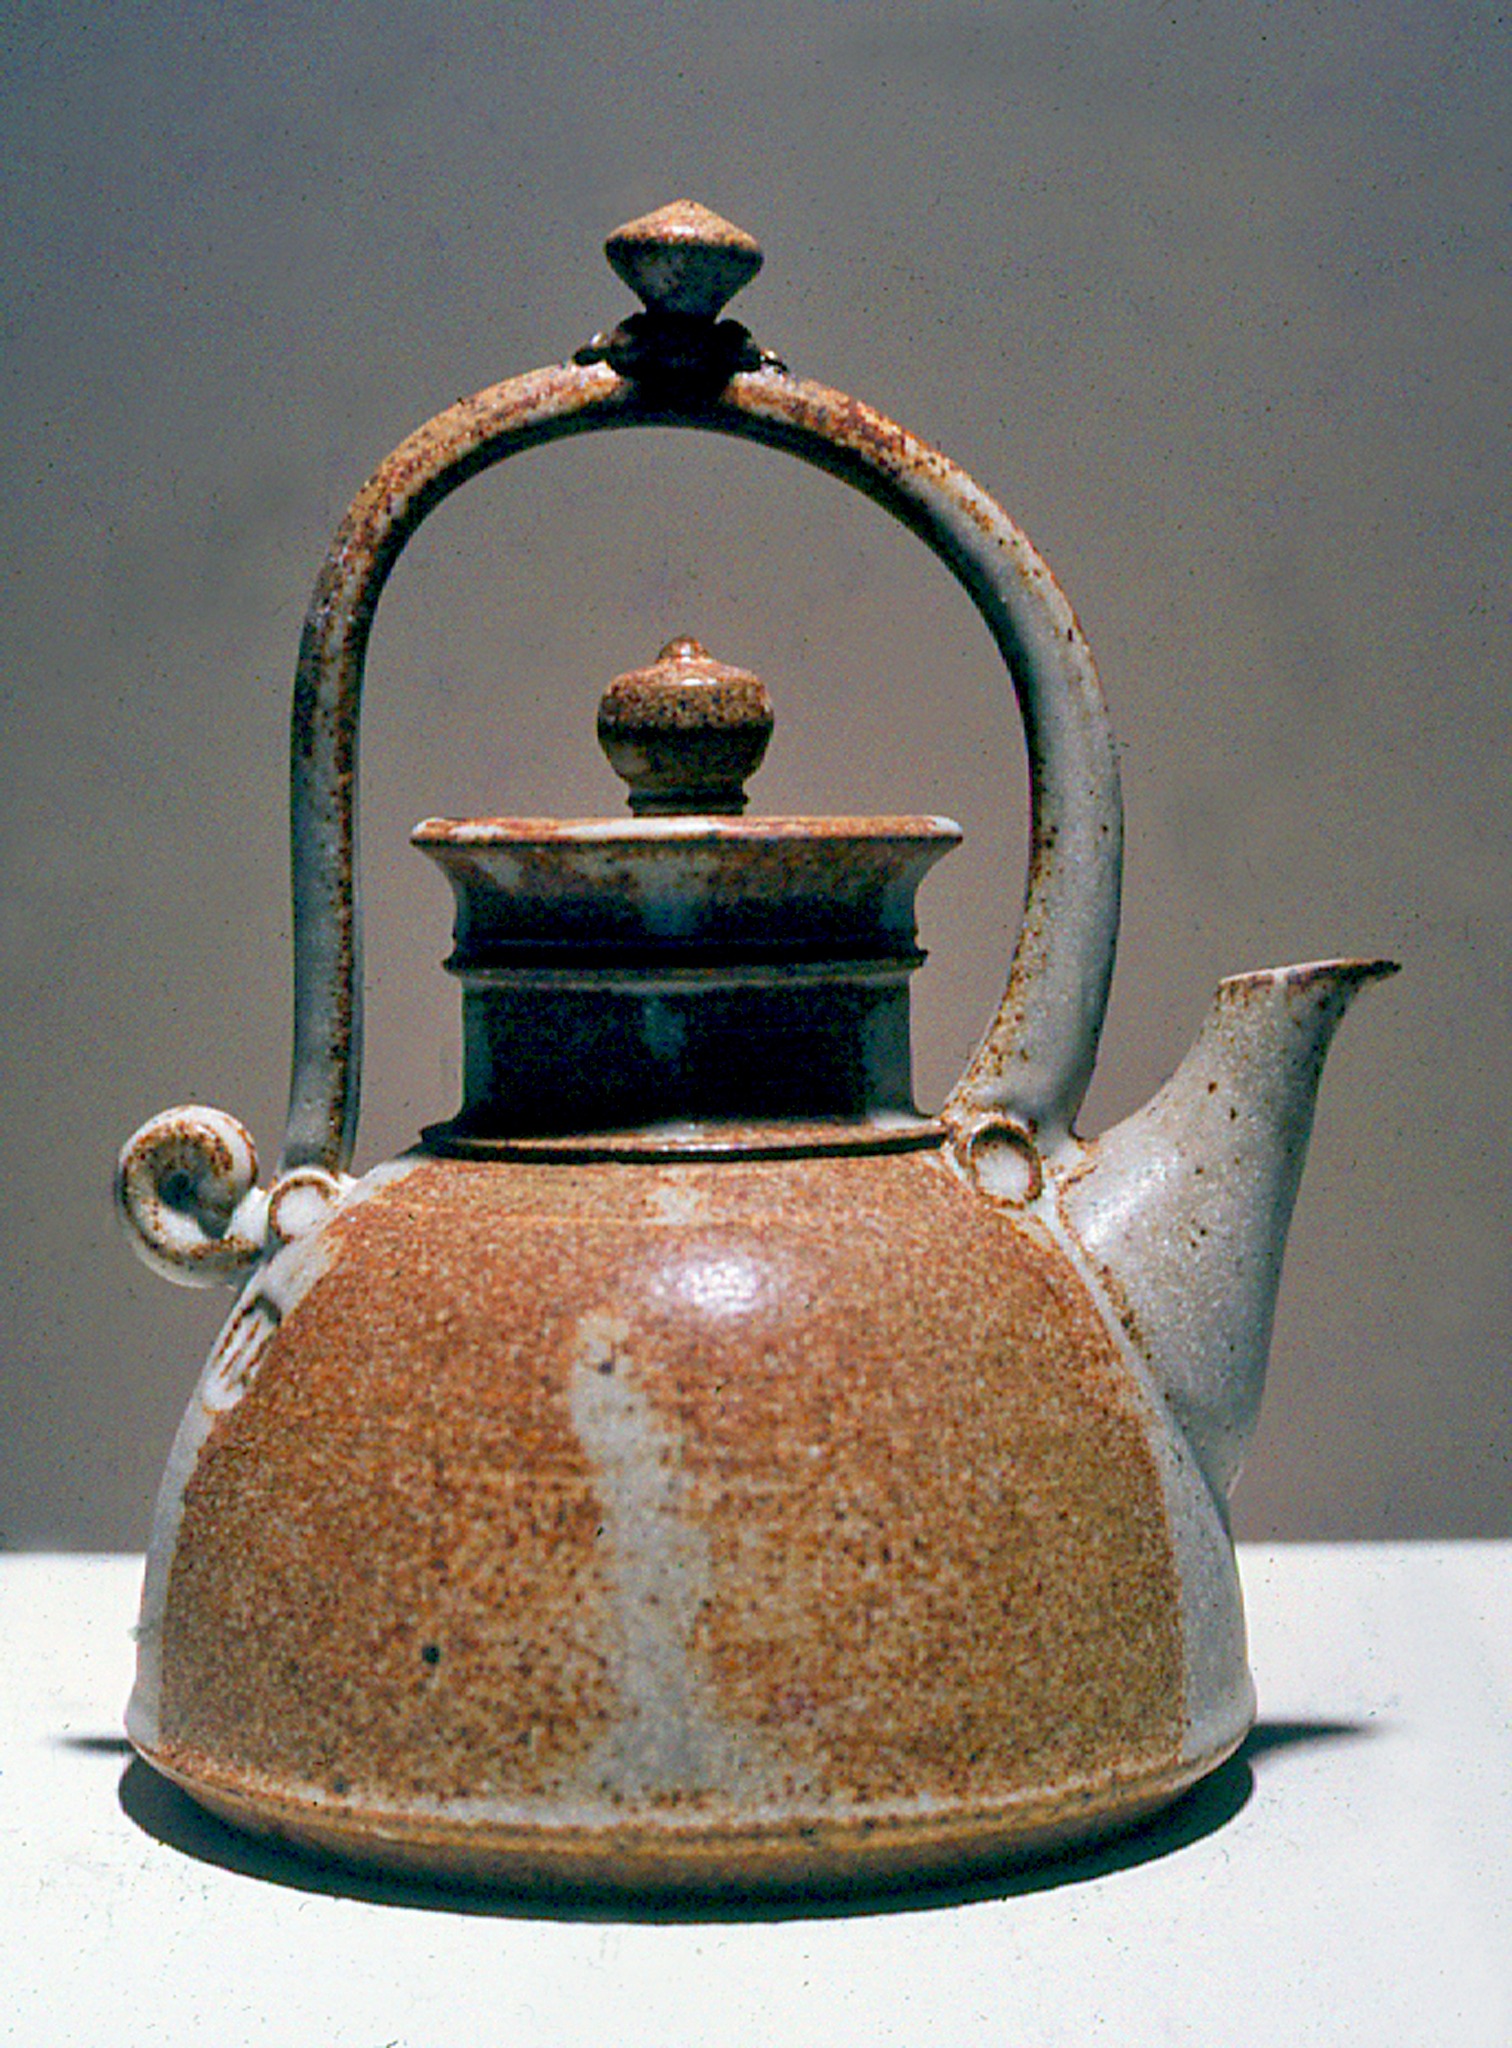 May be an image of tea maker